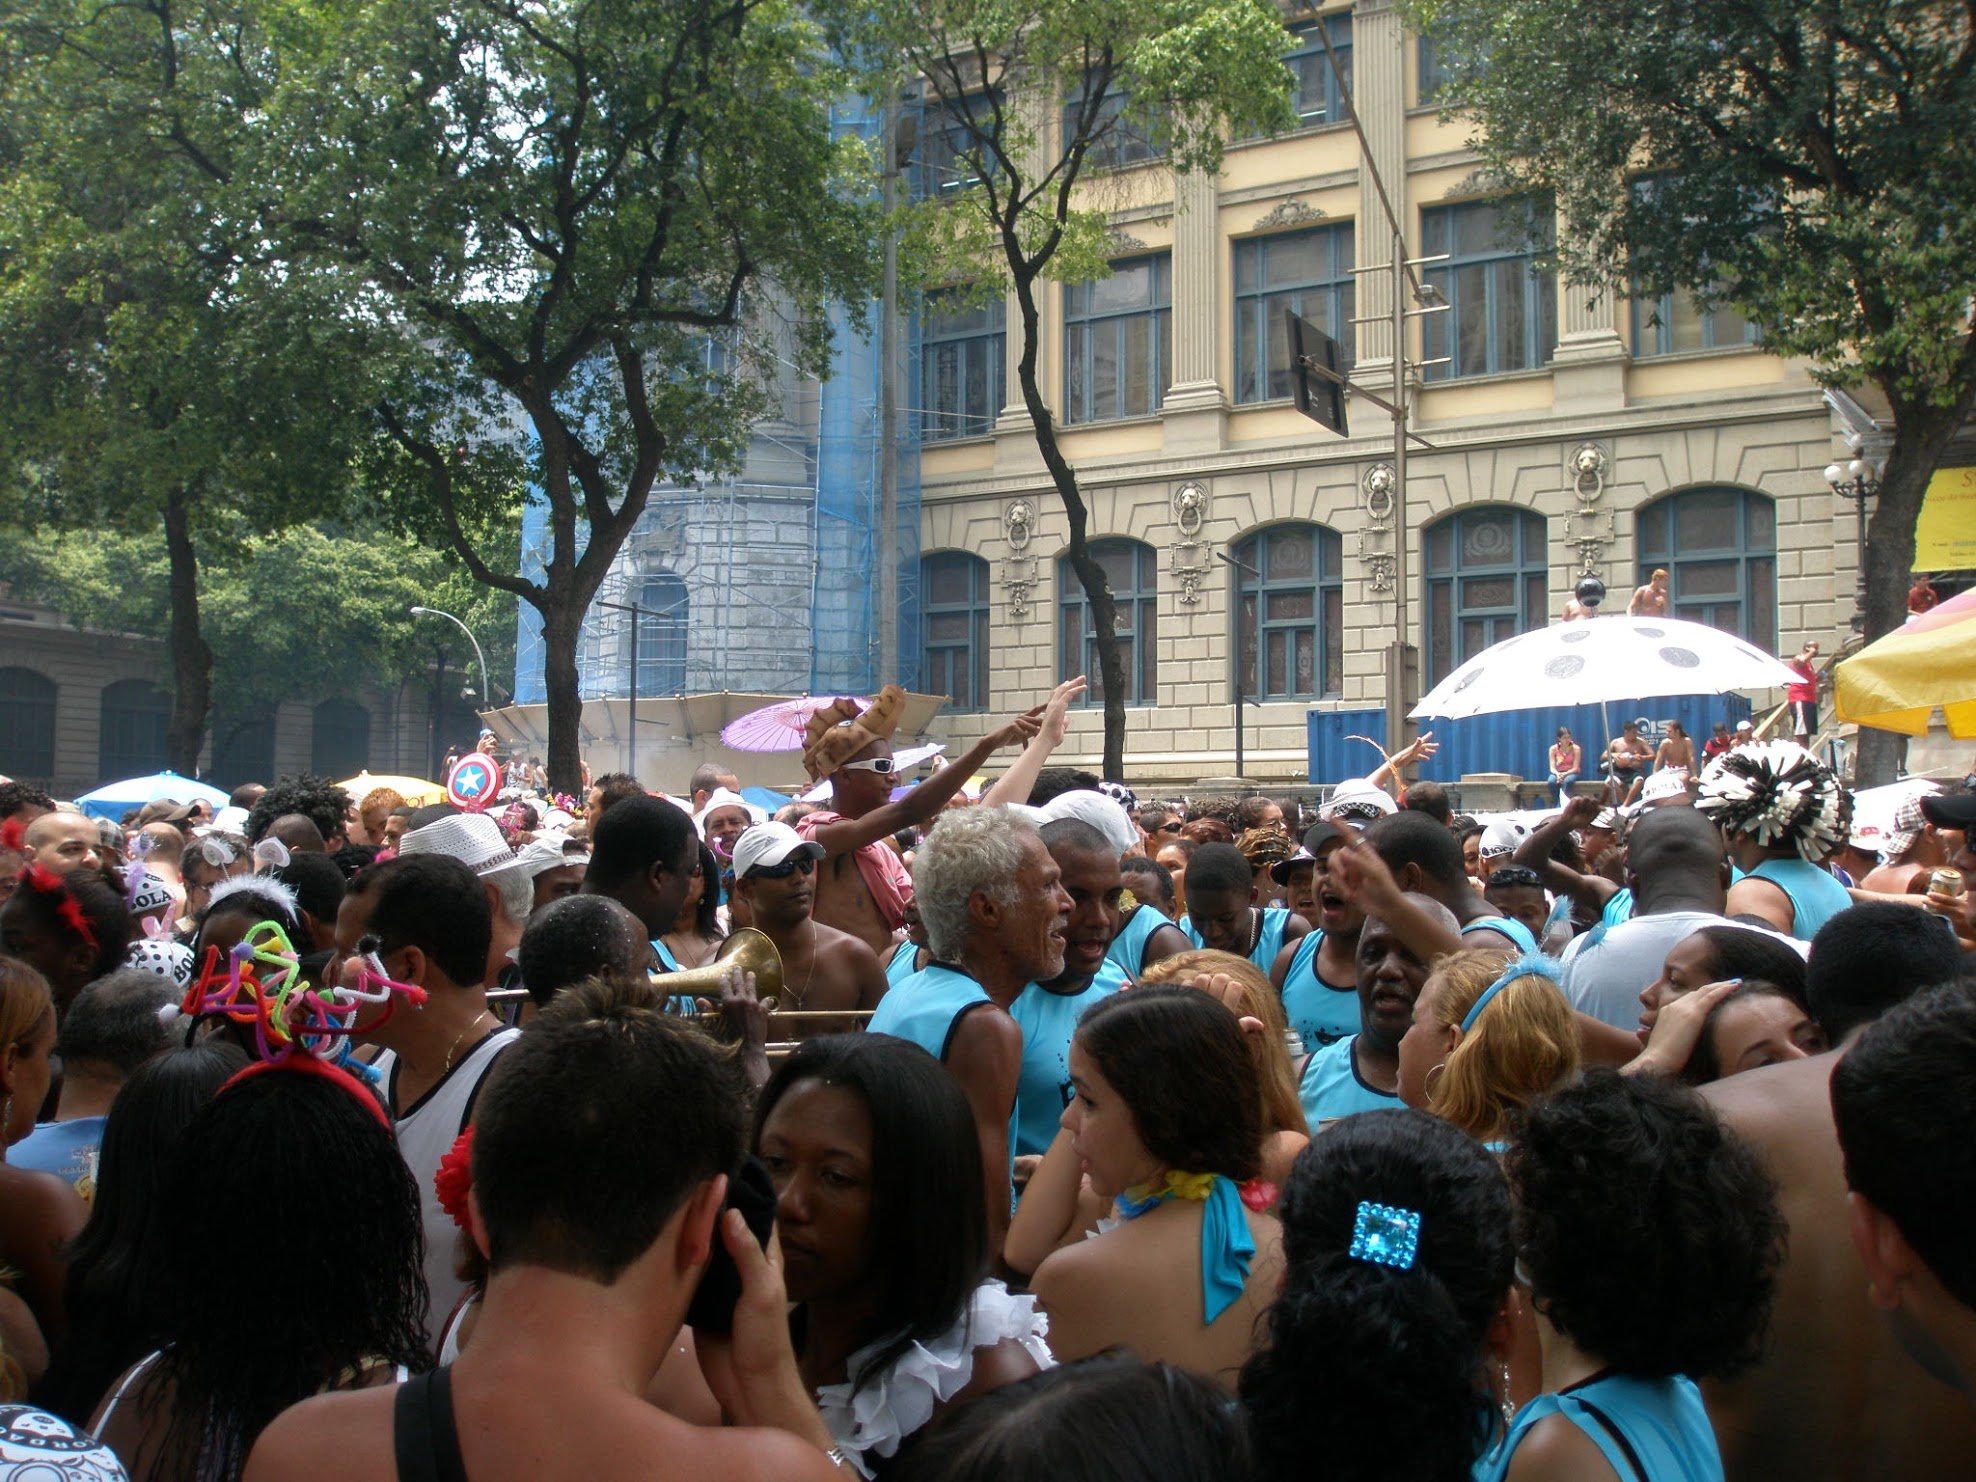 Rio de Janeiro Carnival, Brazil - The Bloco